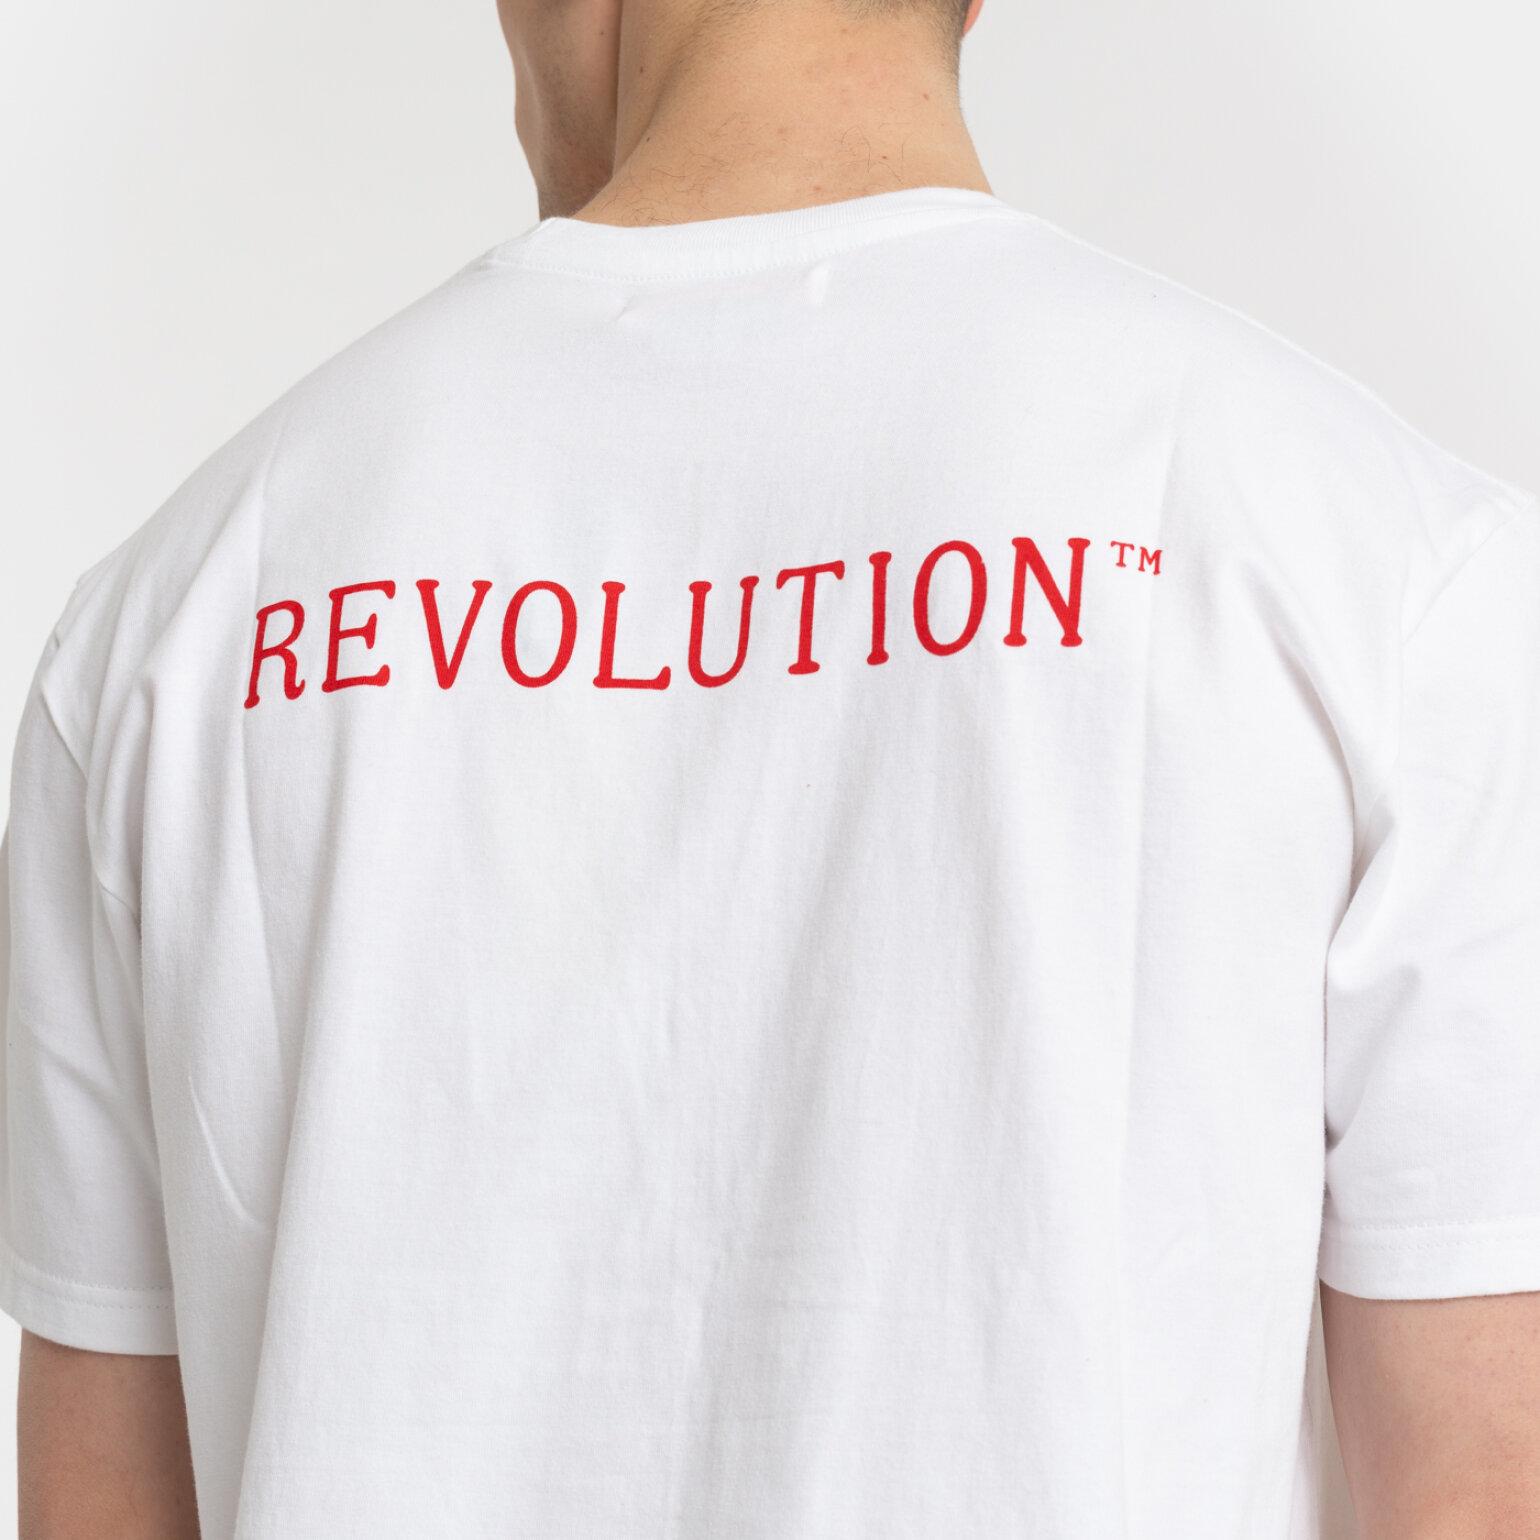 Revolution loose fit t shirt 1540x1540c 4 